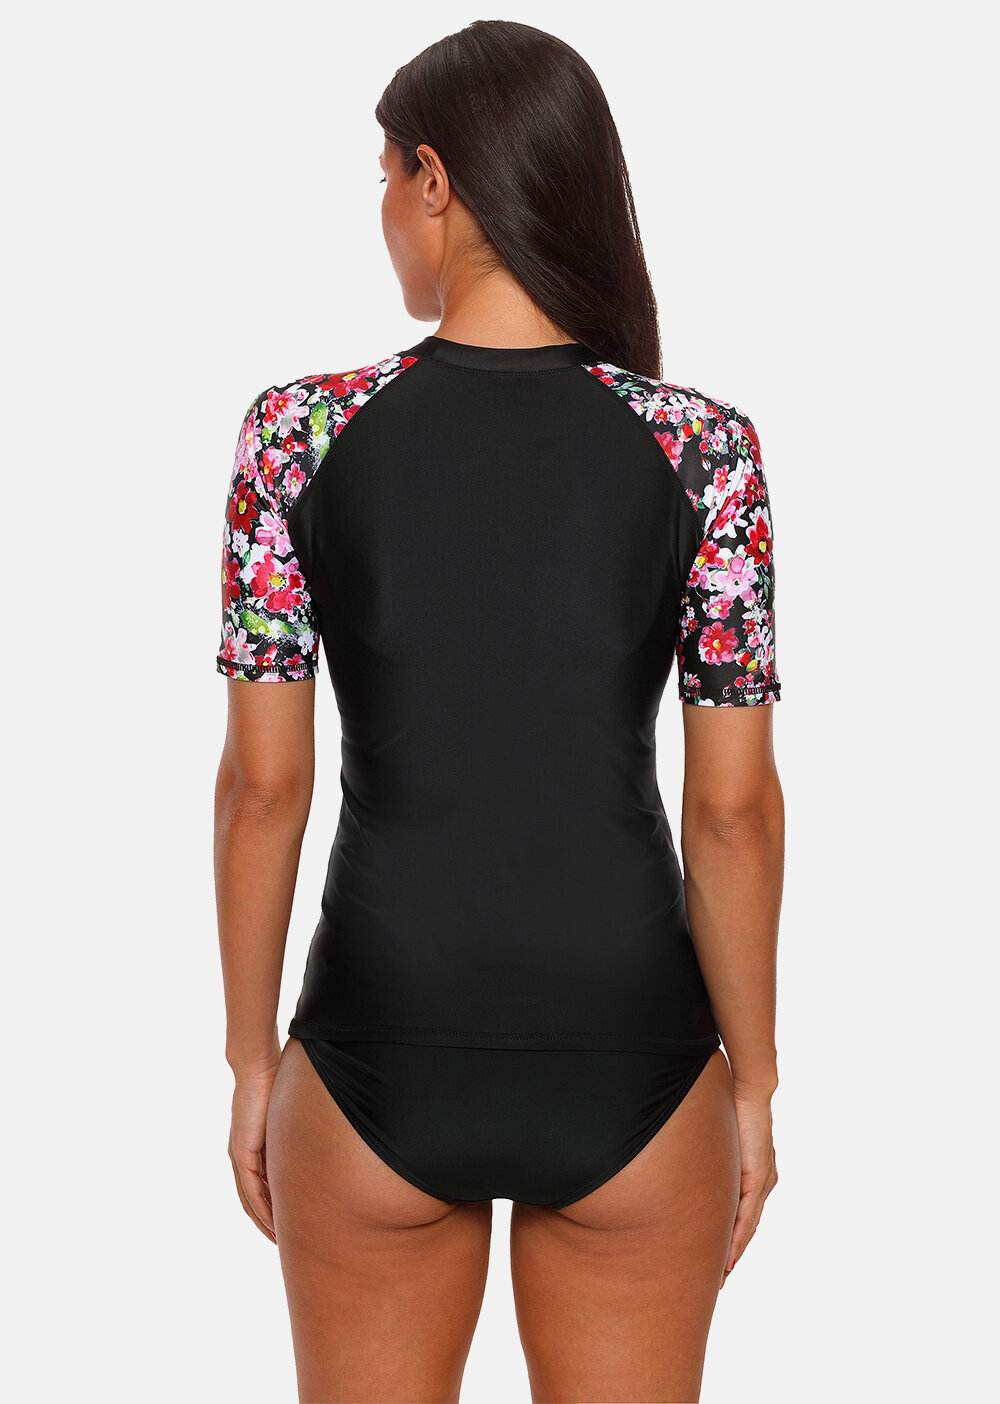 Charmo Women Short Sleeve Dry-Fit Quick-drying Rashguard Swimsuit